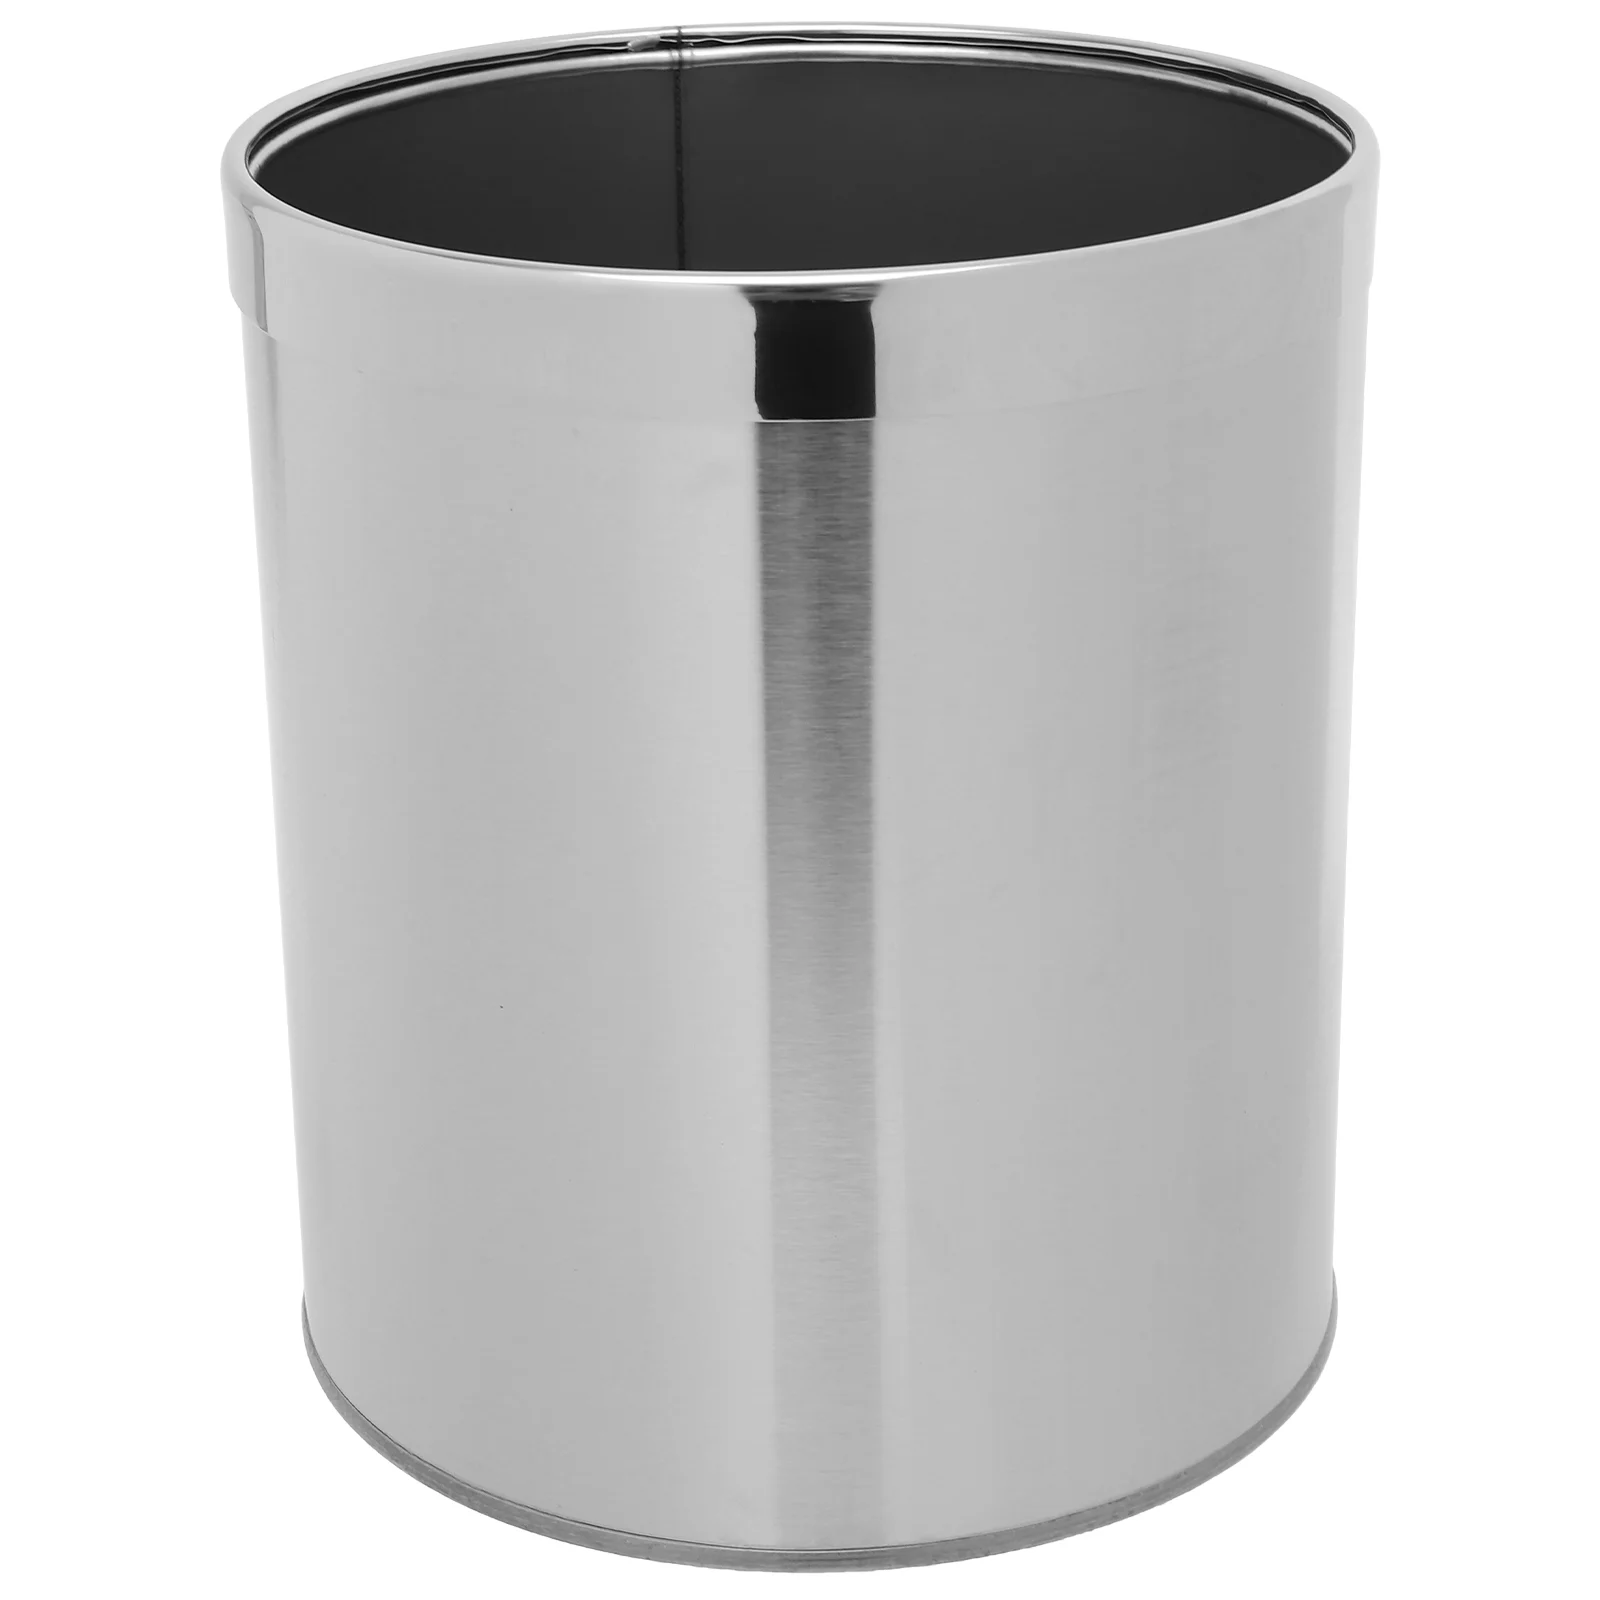 

Stainless Steel Outdoor Trash Can Wastebasket Garbage Container Recycle Bin Garbage Basket Waste Bins Rubbish Bucket